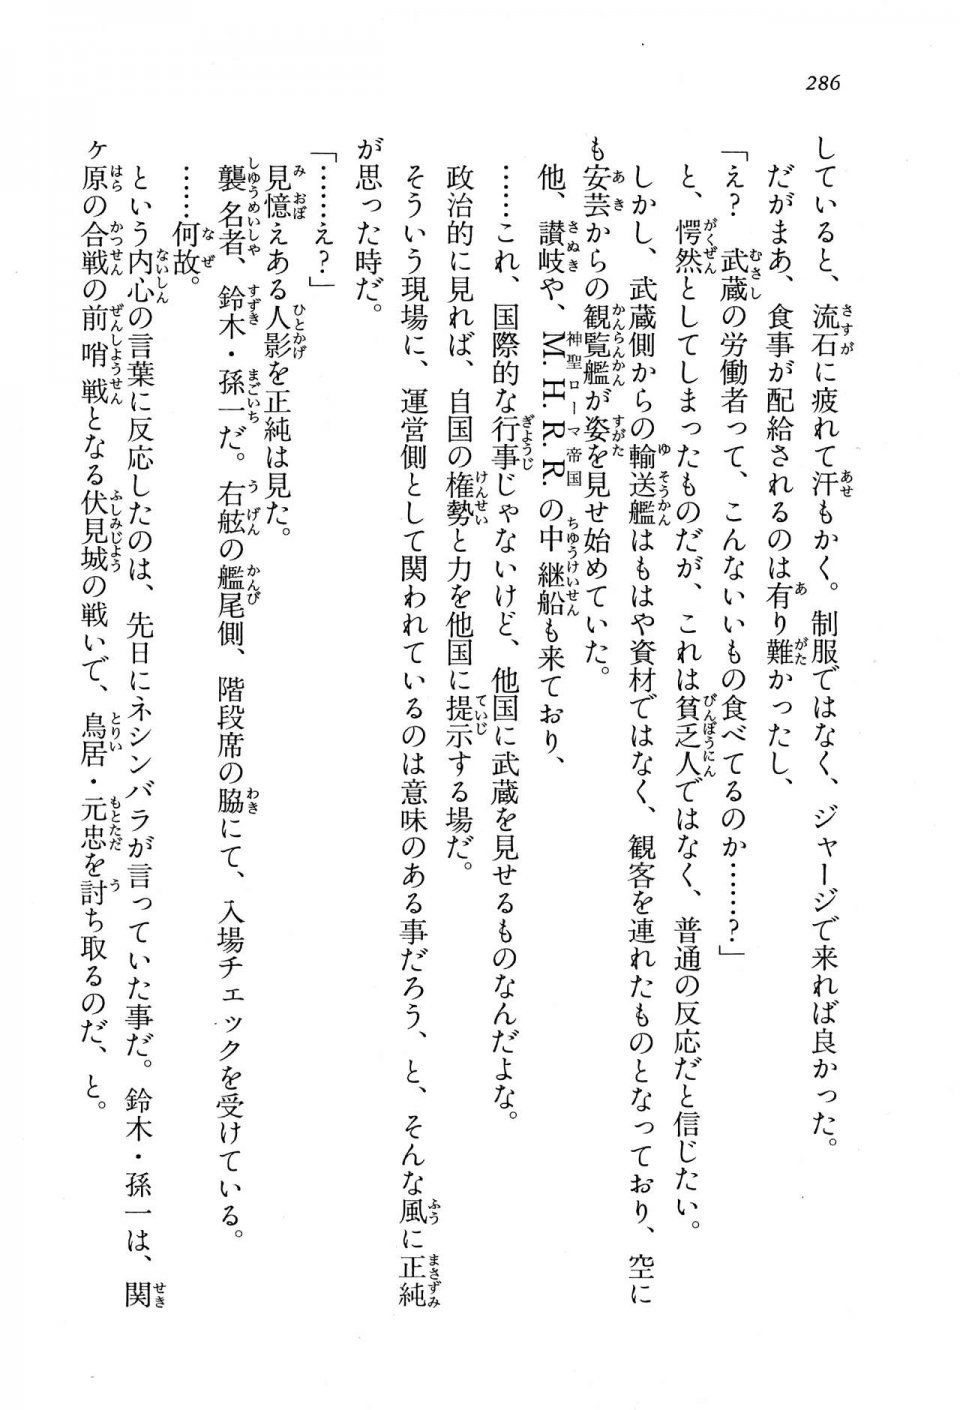 Kyoukai Senjou no Horizon BD Special Mininovel Vol 8(4B) - Photo #290